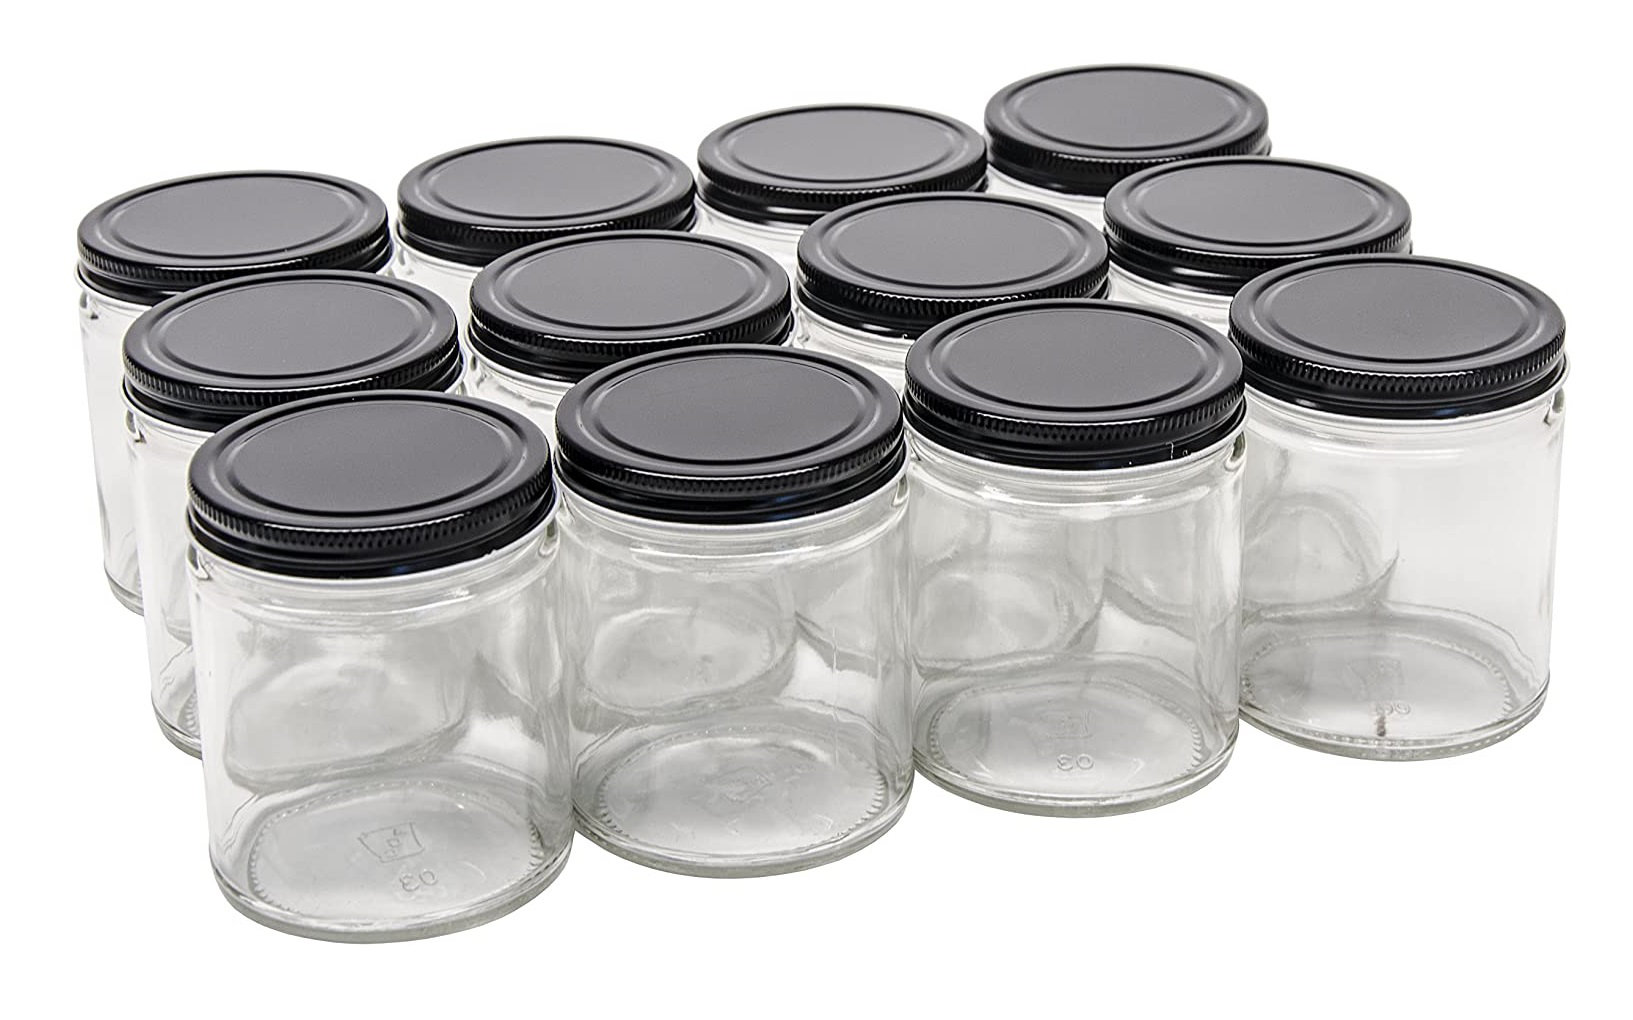 8 oz Straight Sided Glass Jars